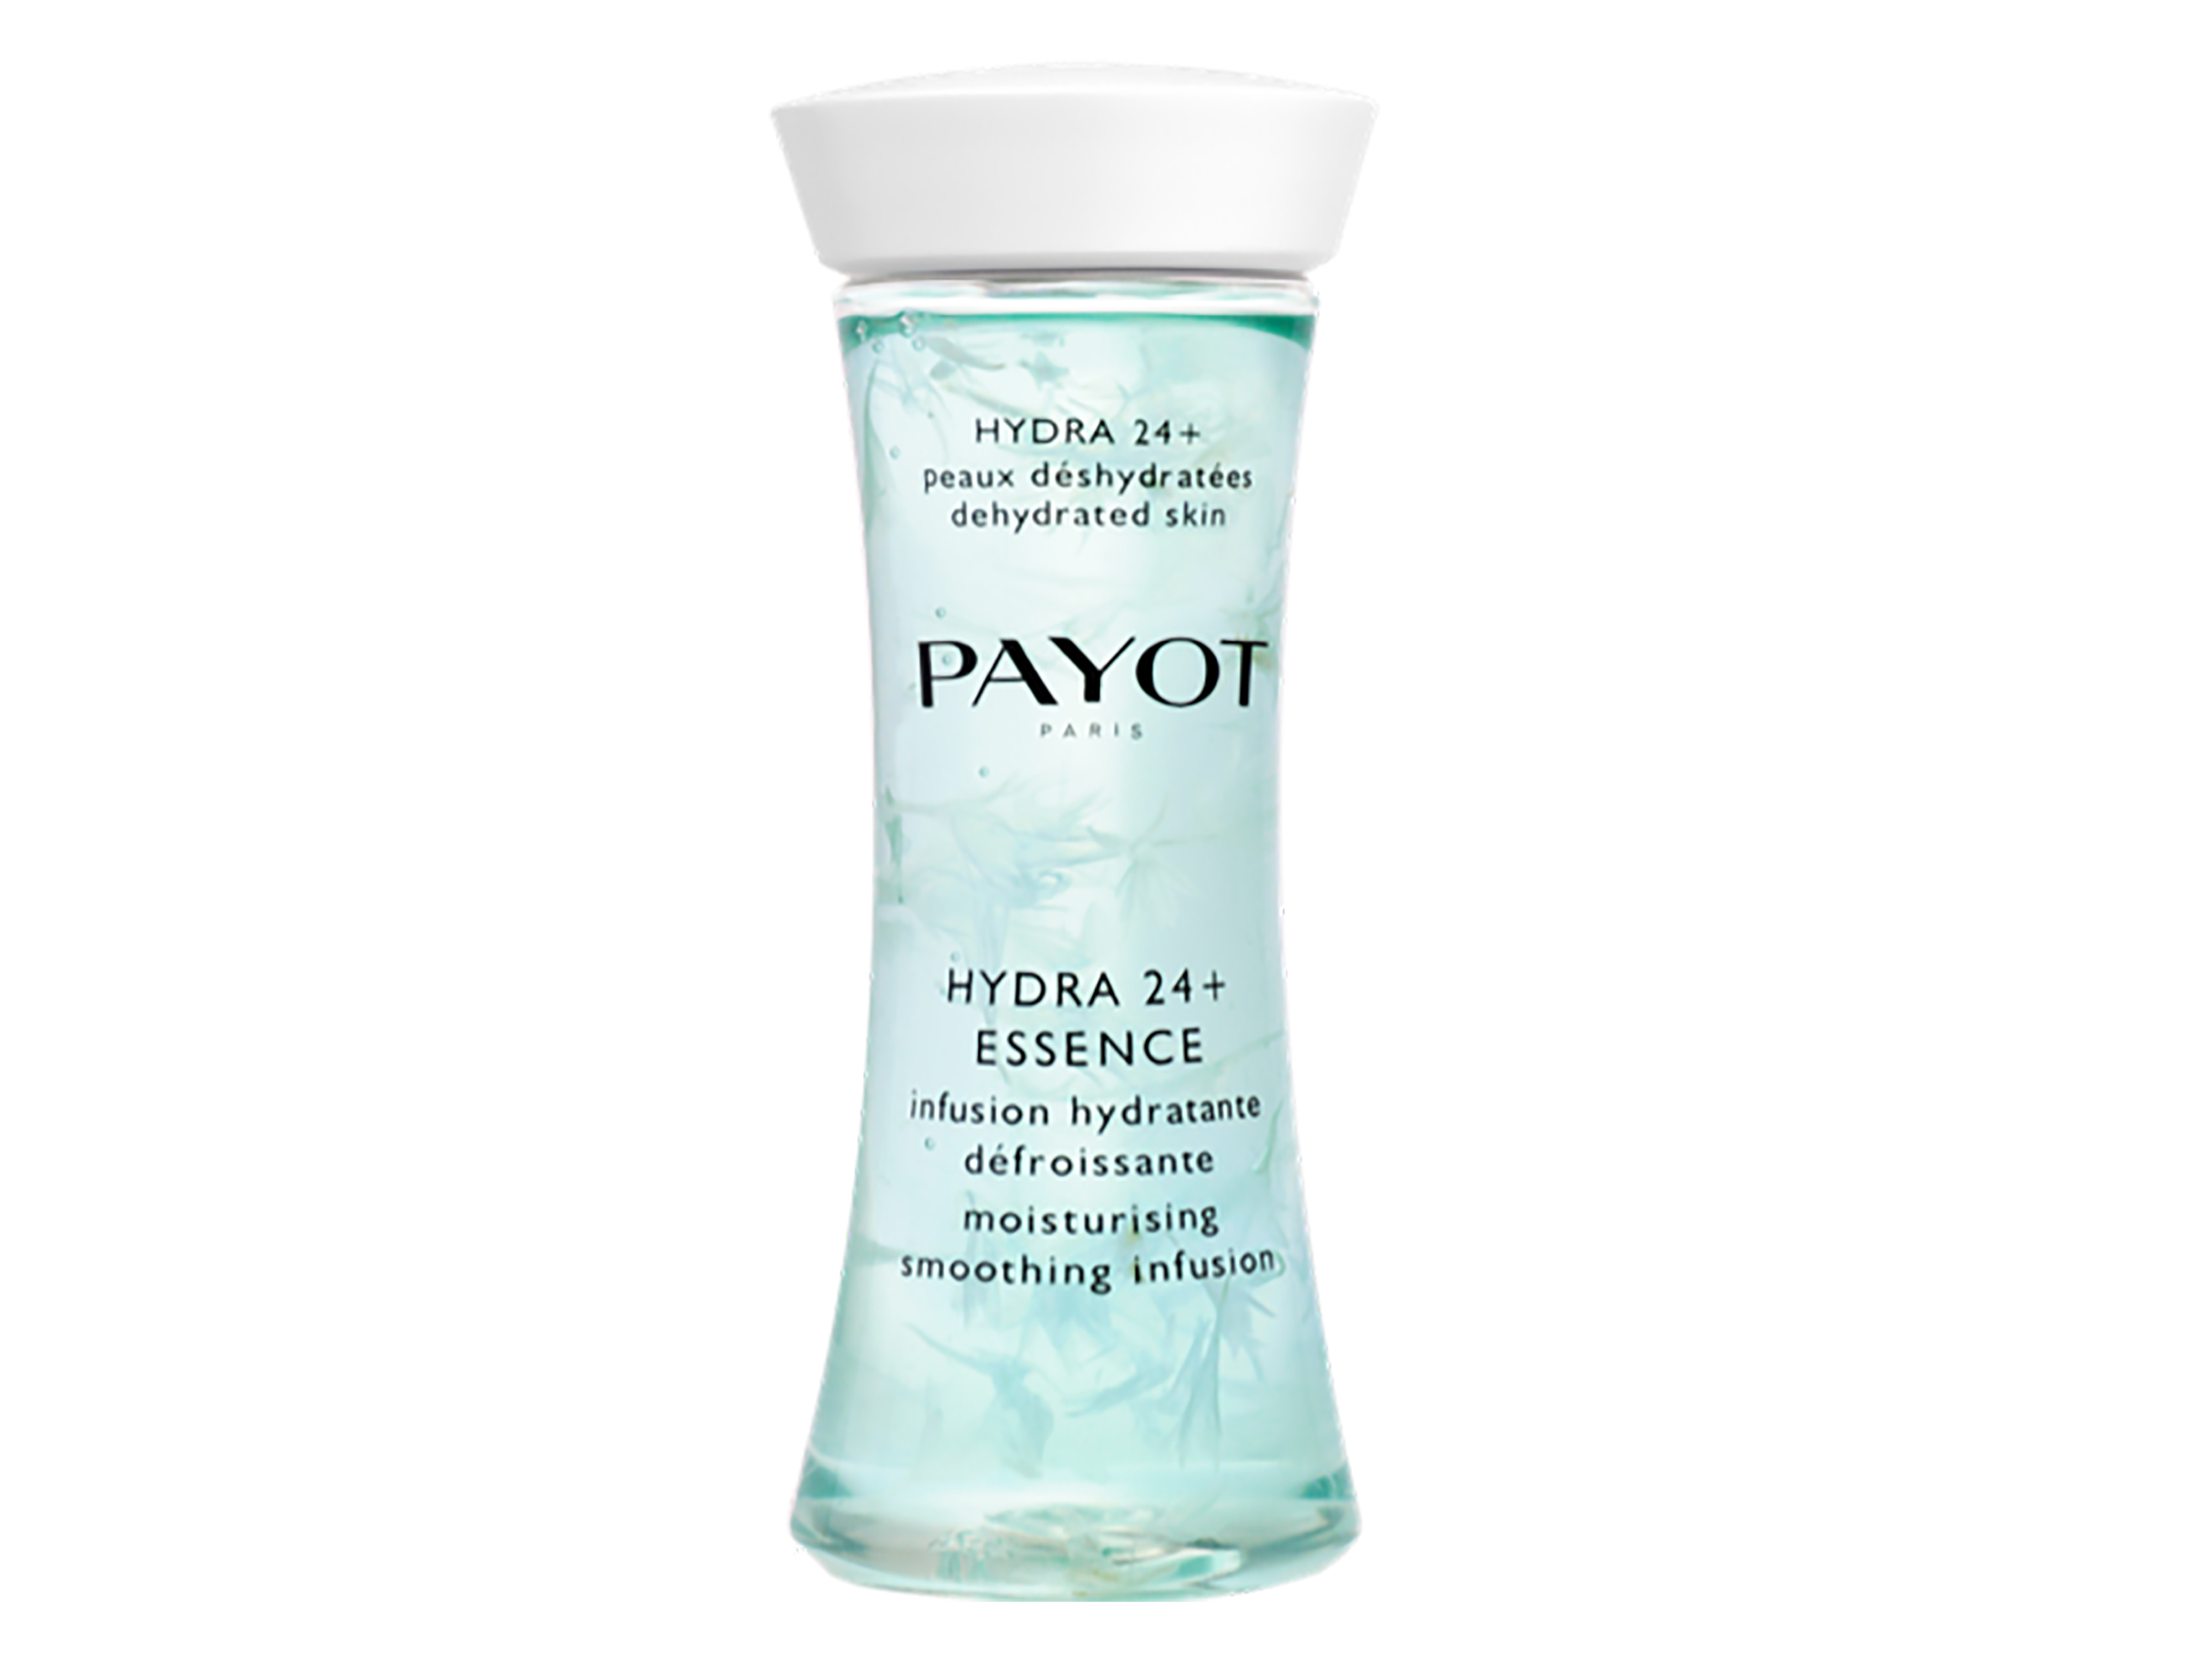 Payot Payot Hydra 24+ Essence, 125